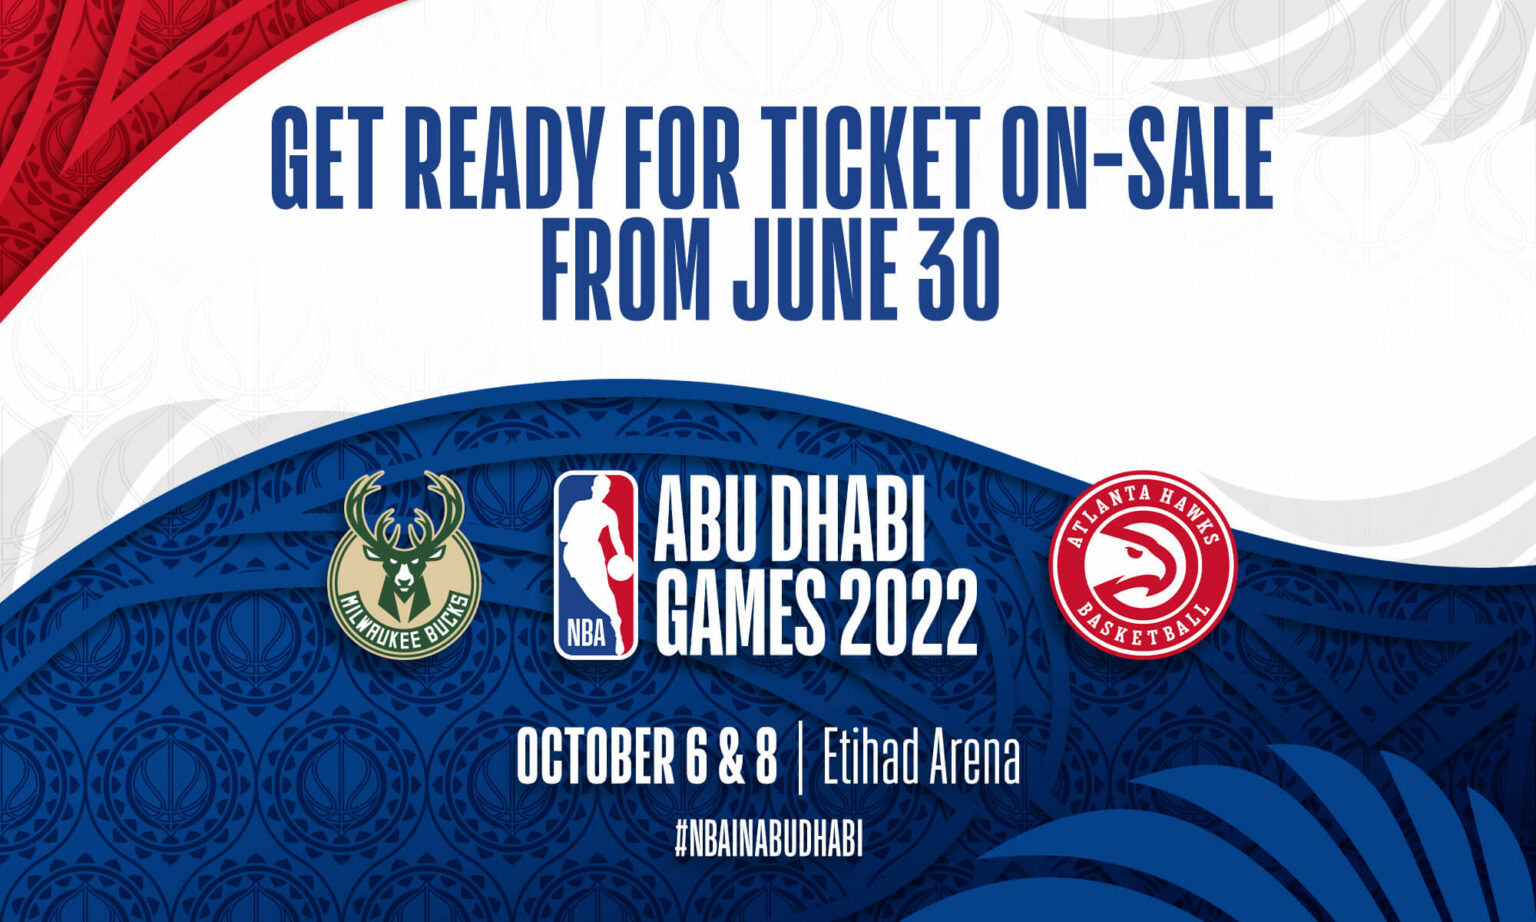 Tickets for NBA Abu Dhabi Games 2022 featuring Piratasdelbasket